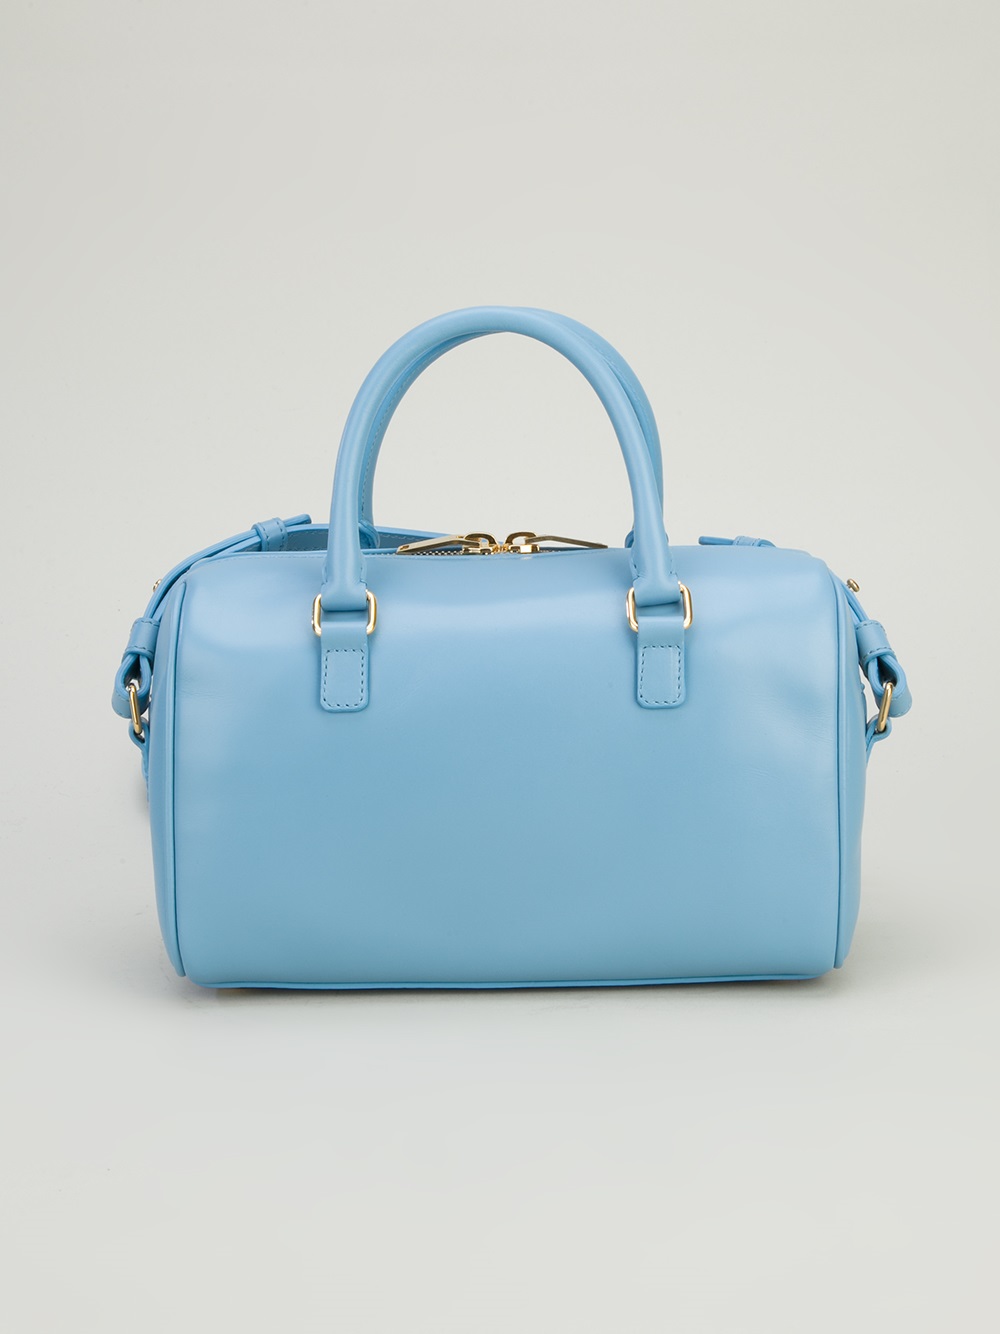 Lyst - Saint Laurent Classic Baby Duffle Bag in Blue